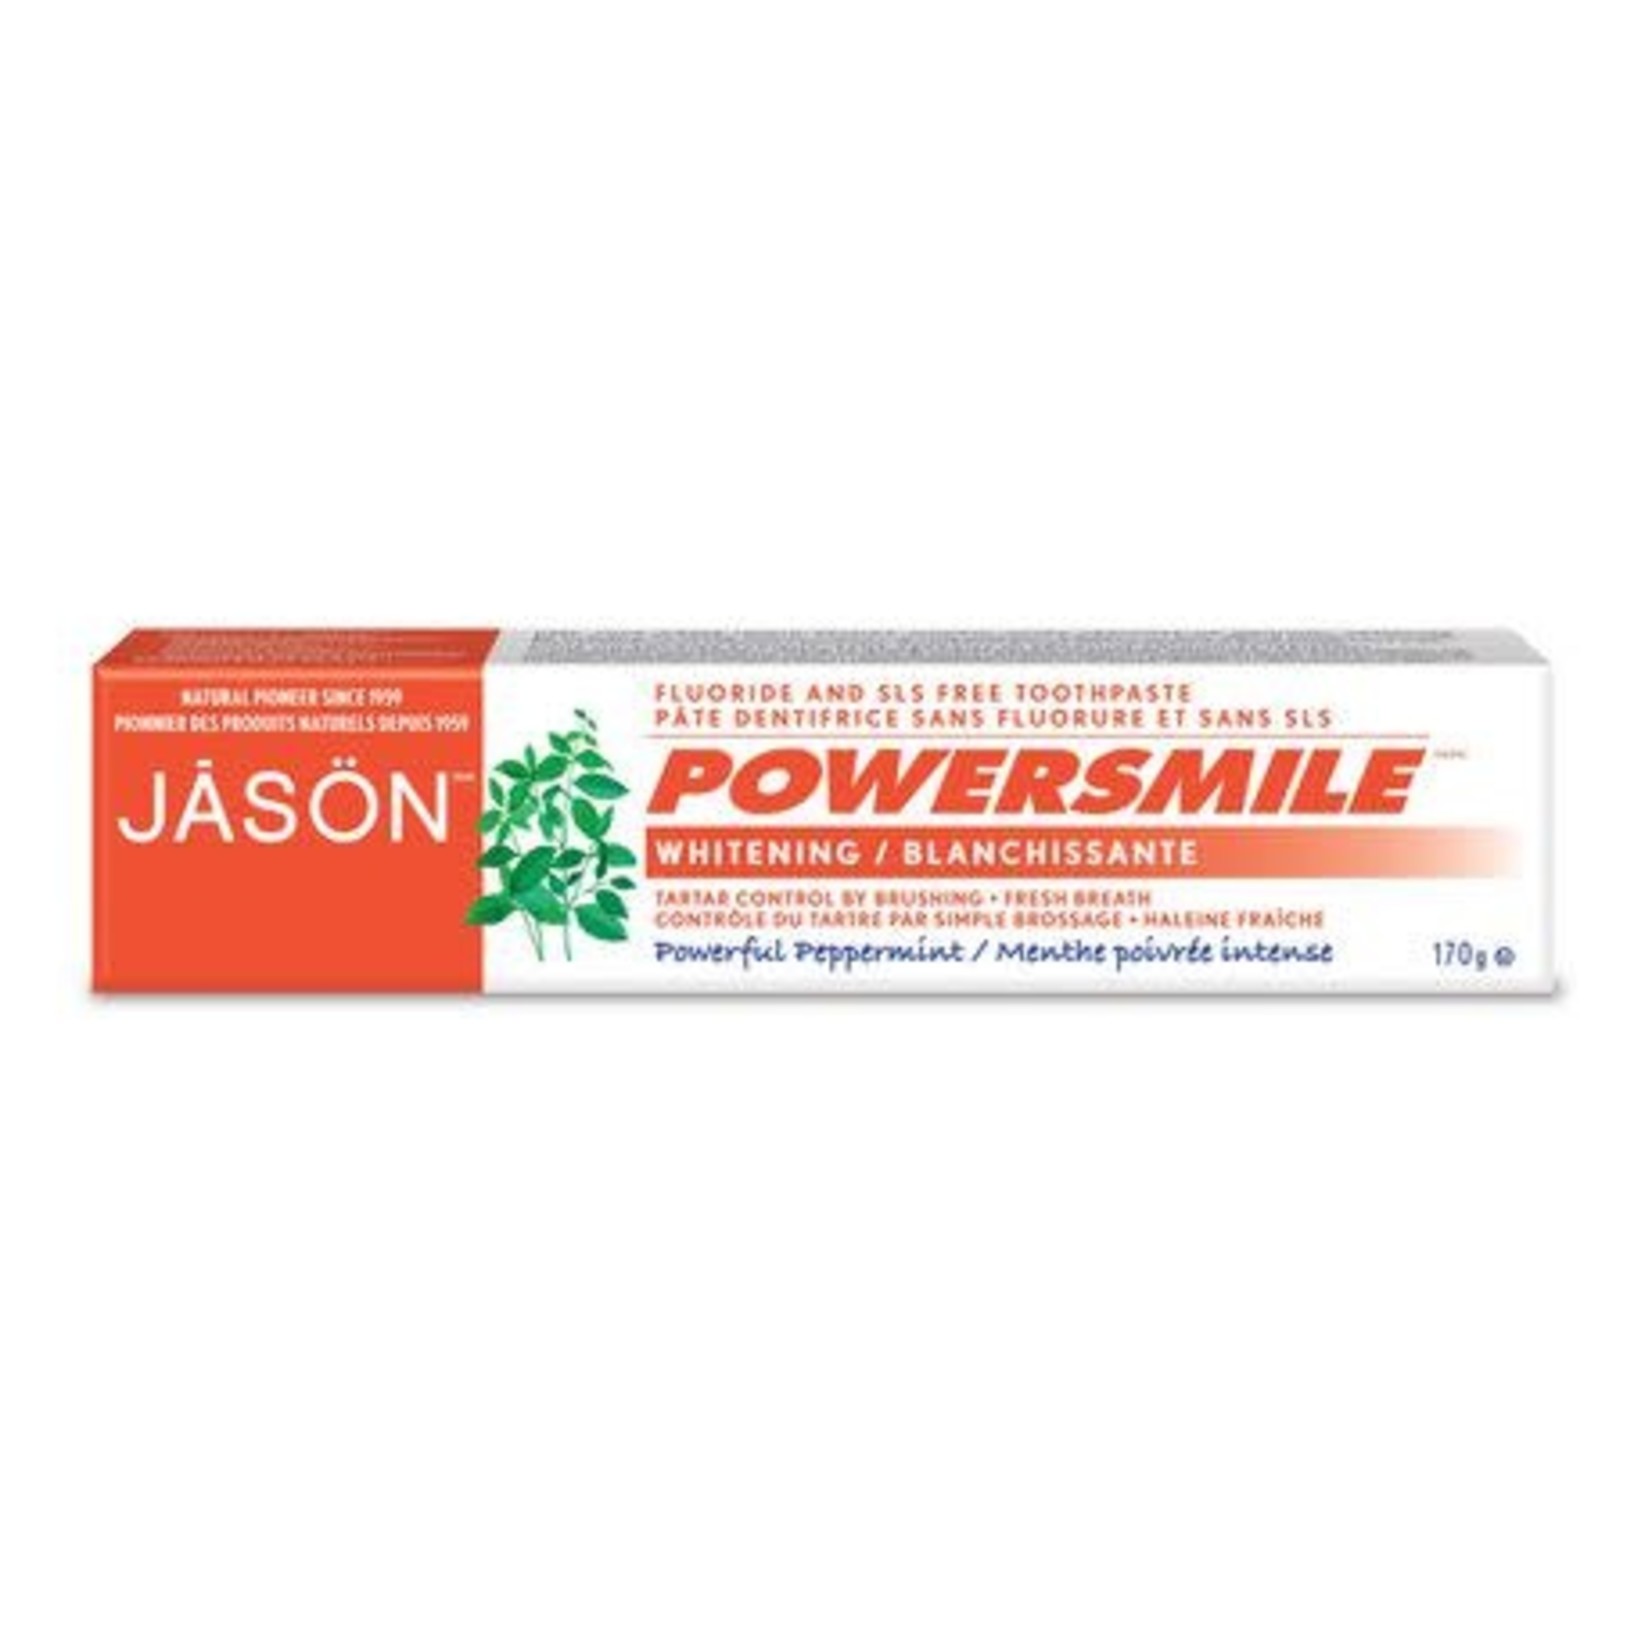 JASON JASON POWER SMILE - WHITENING TOOTHPASTE - FLUORIDE FREE, POWERFUL PEPPERMINT 170G